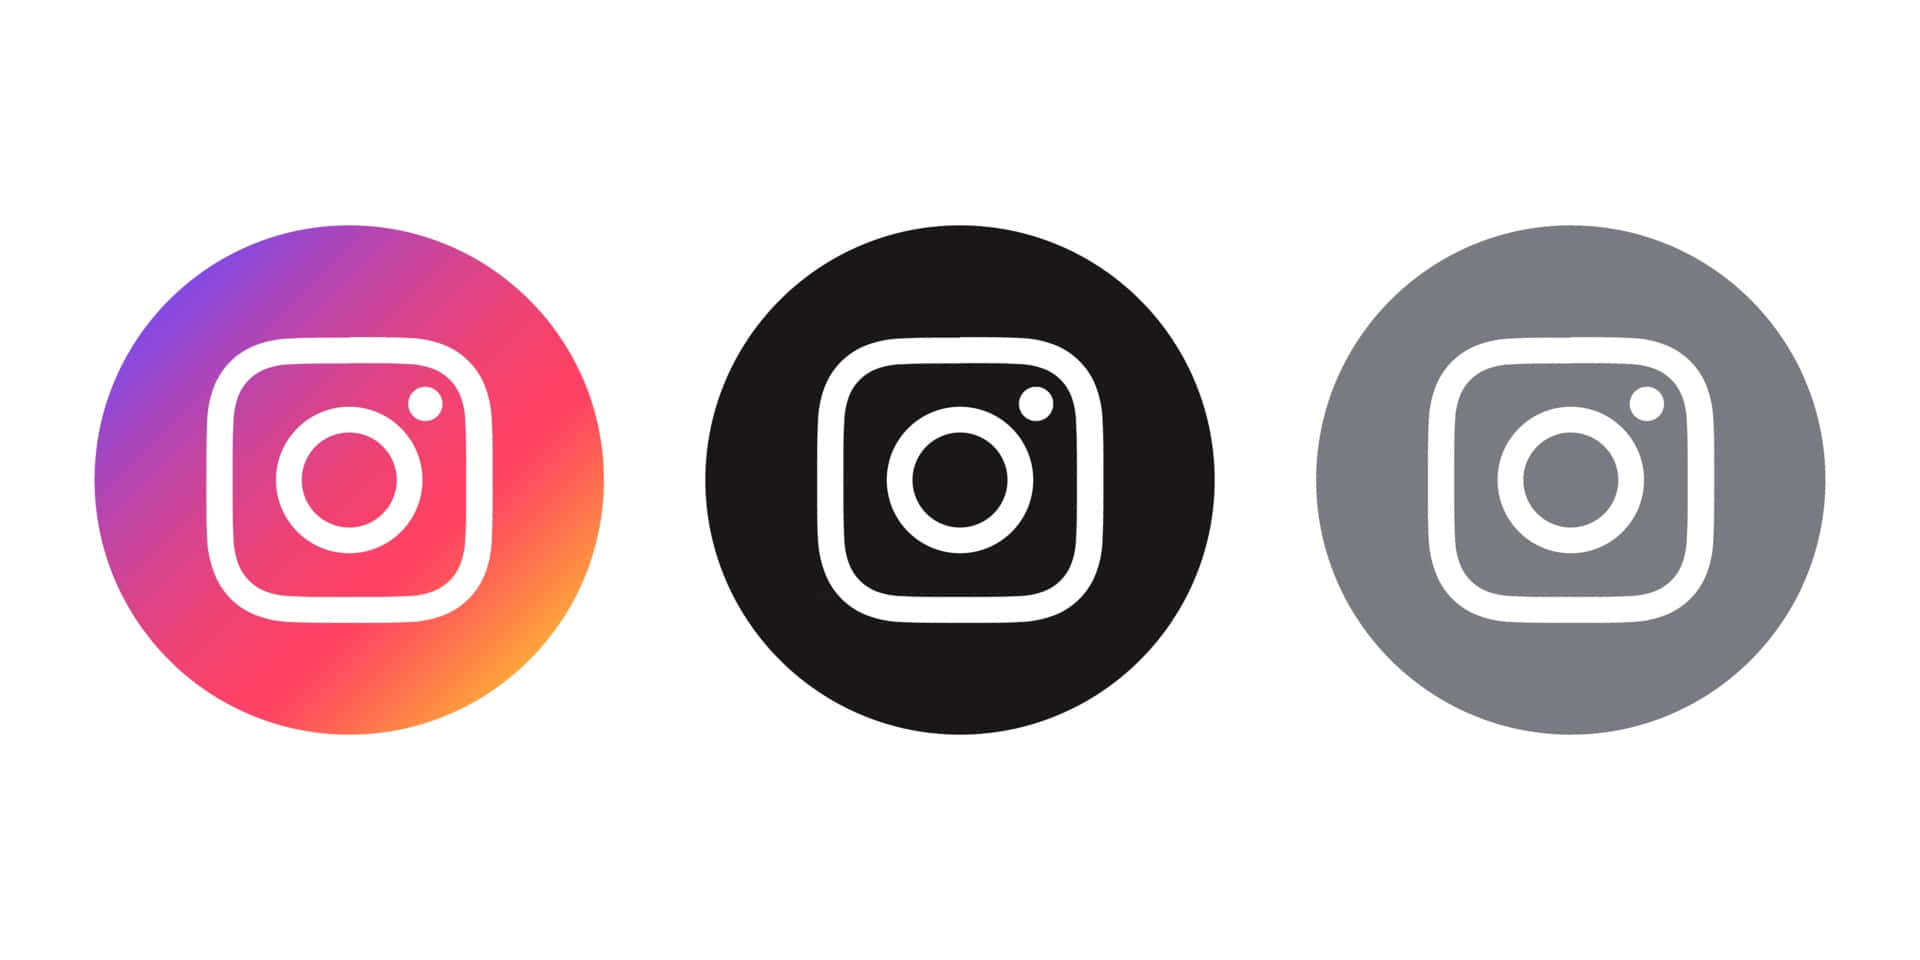 Download Instagram Logos Picture | Wallpapers.com